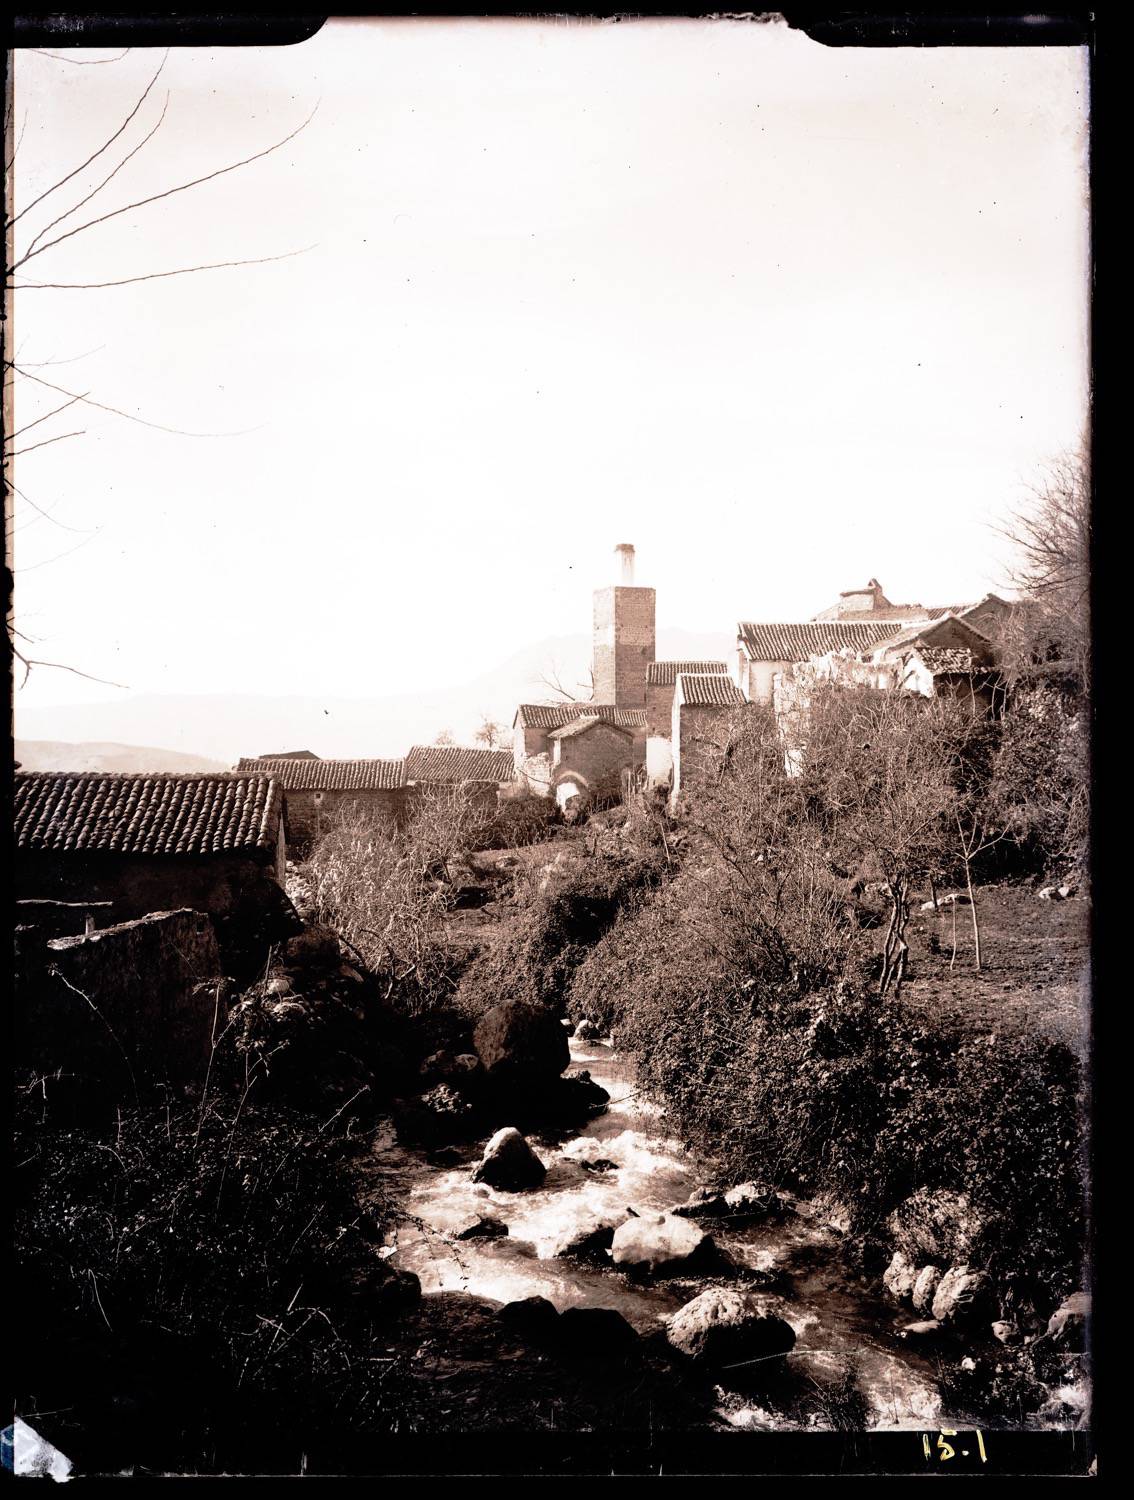 Jami' Sidi Boukhancha - Exterior view of the village with the minaret of Jami' Sidi Boukhancha